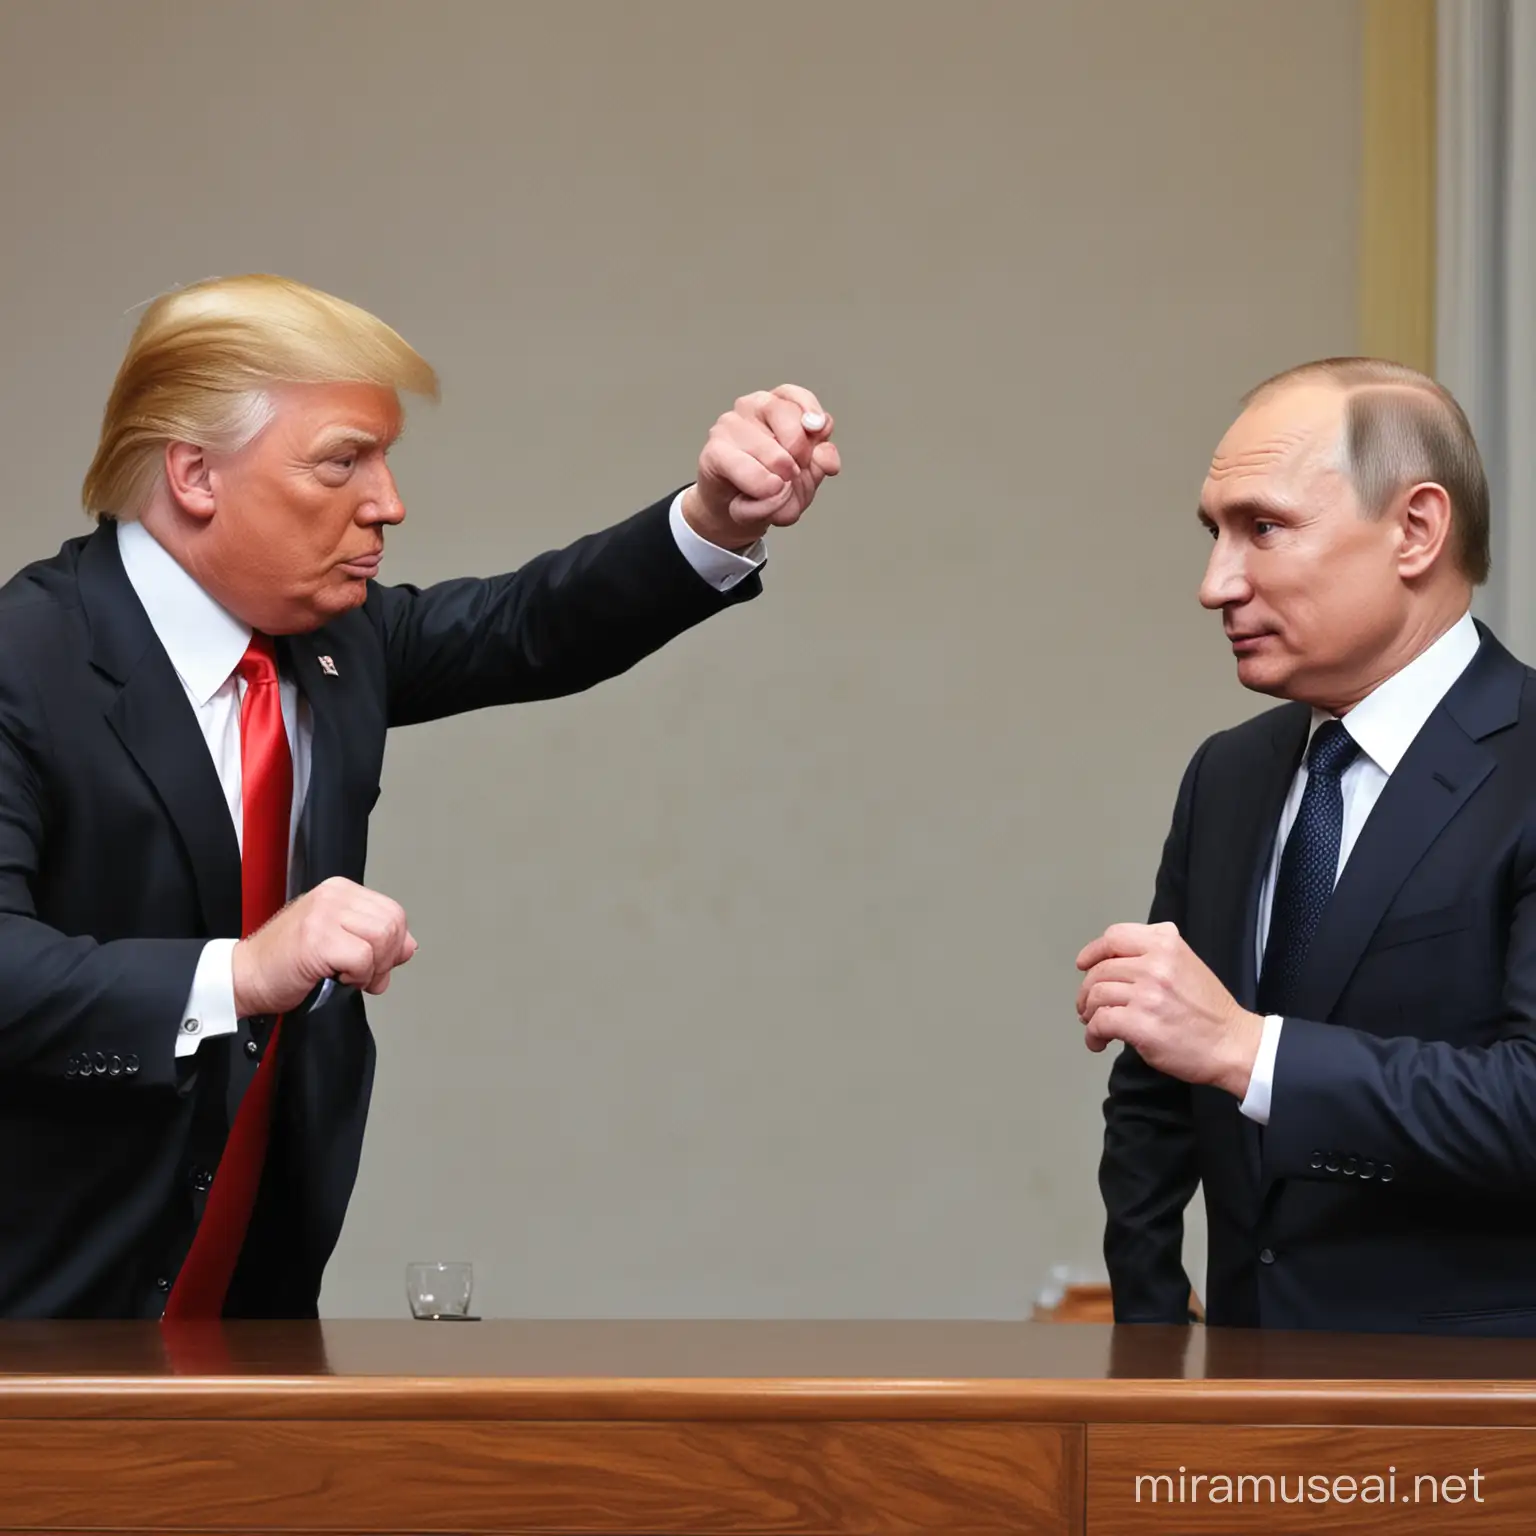 Vladimir Putin Puppeteering Donald Trump Political Manipulation in Action